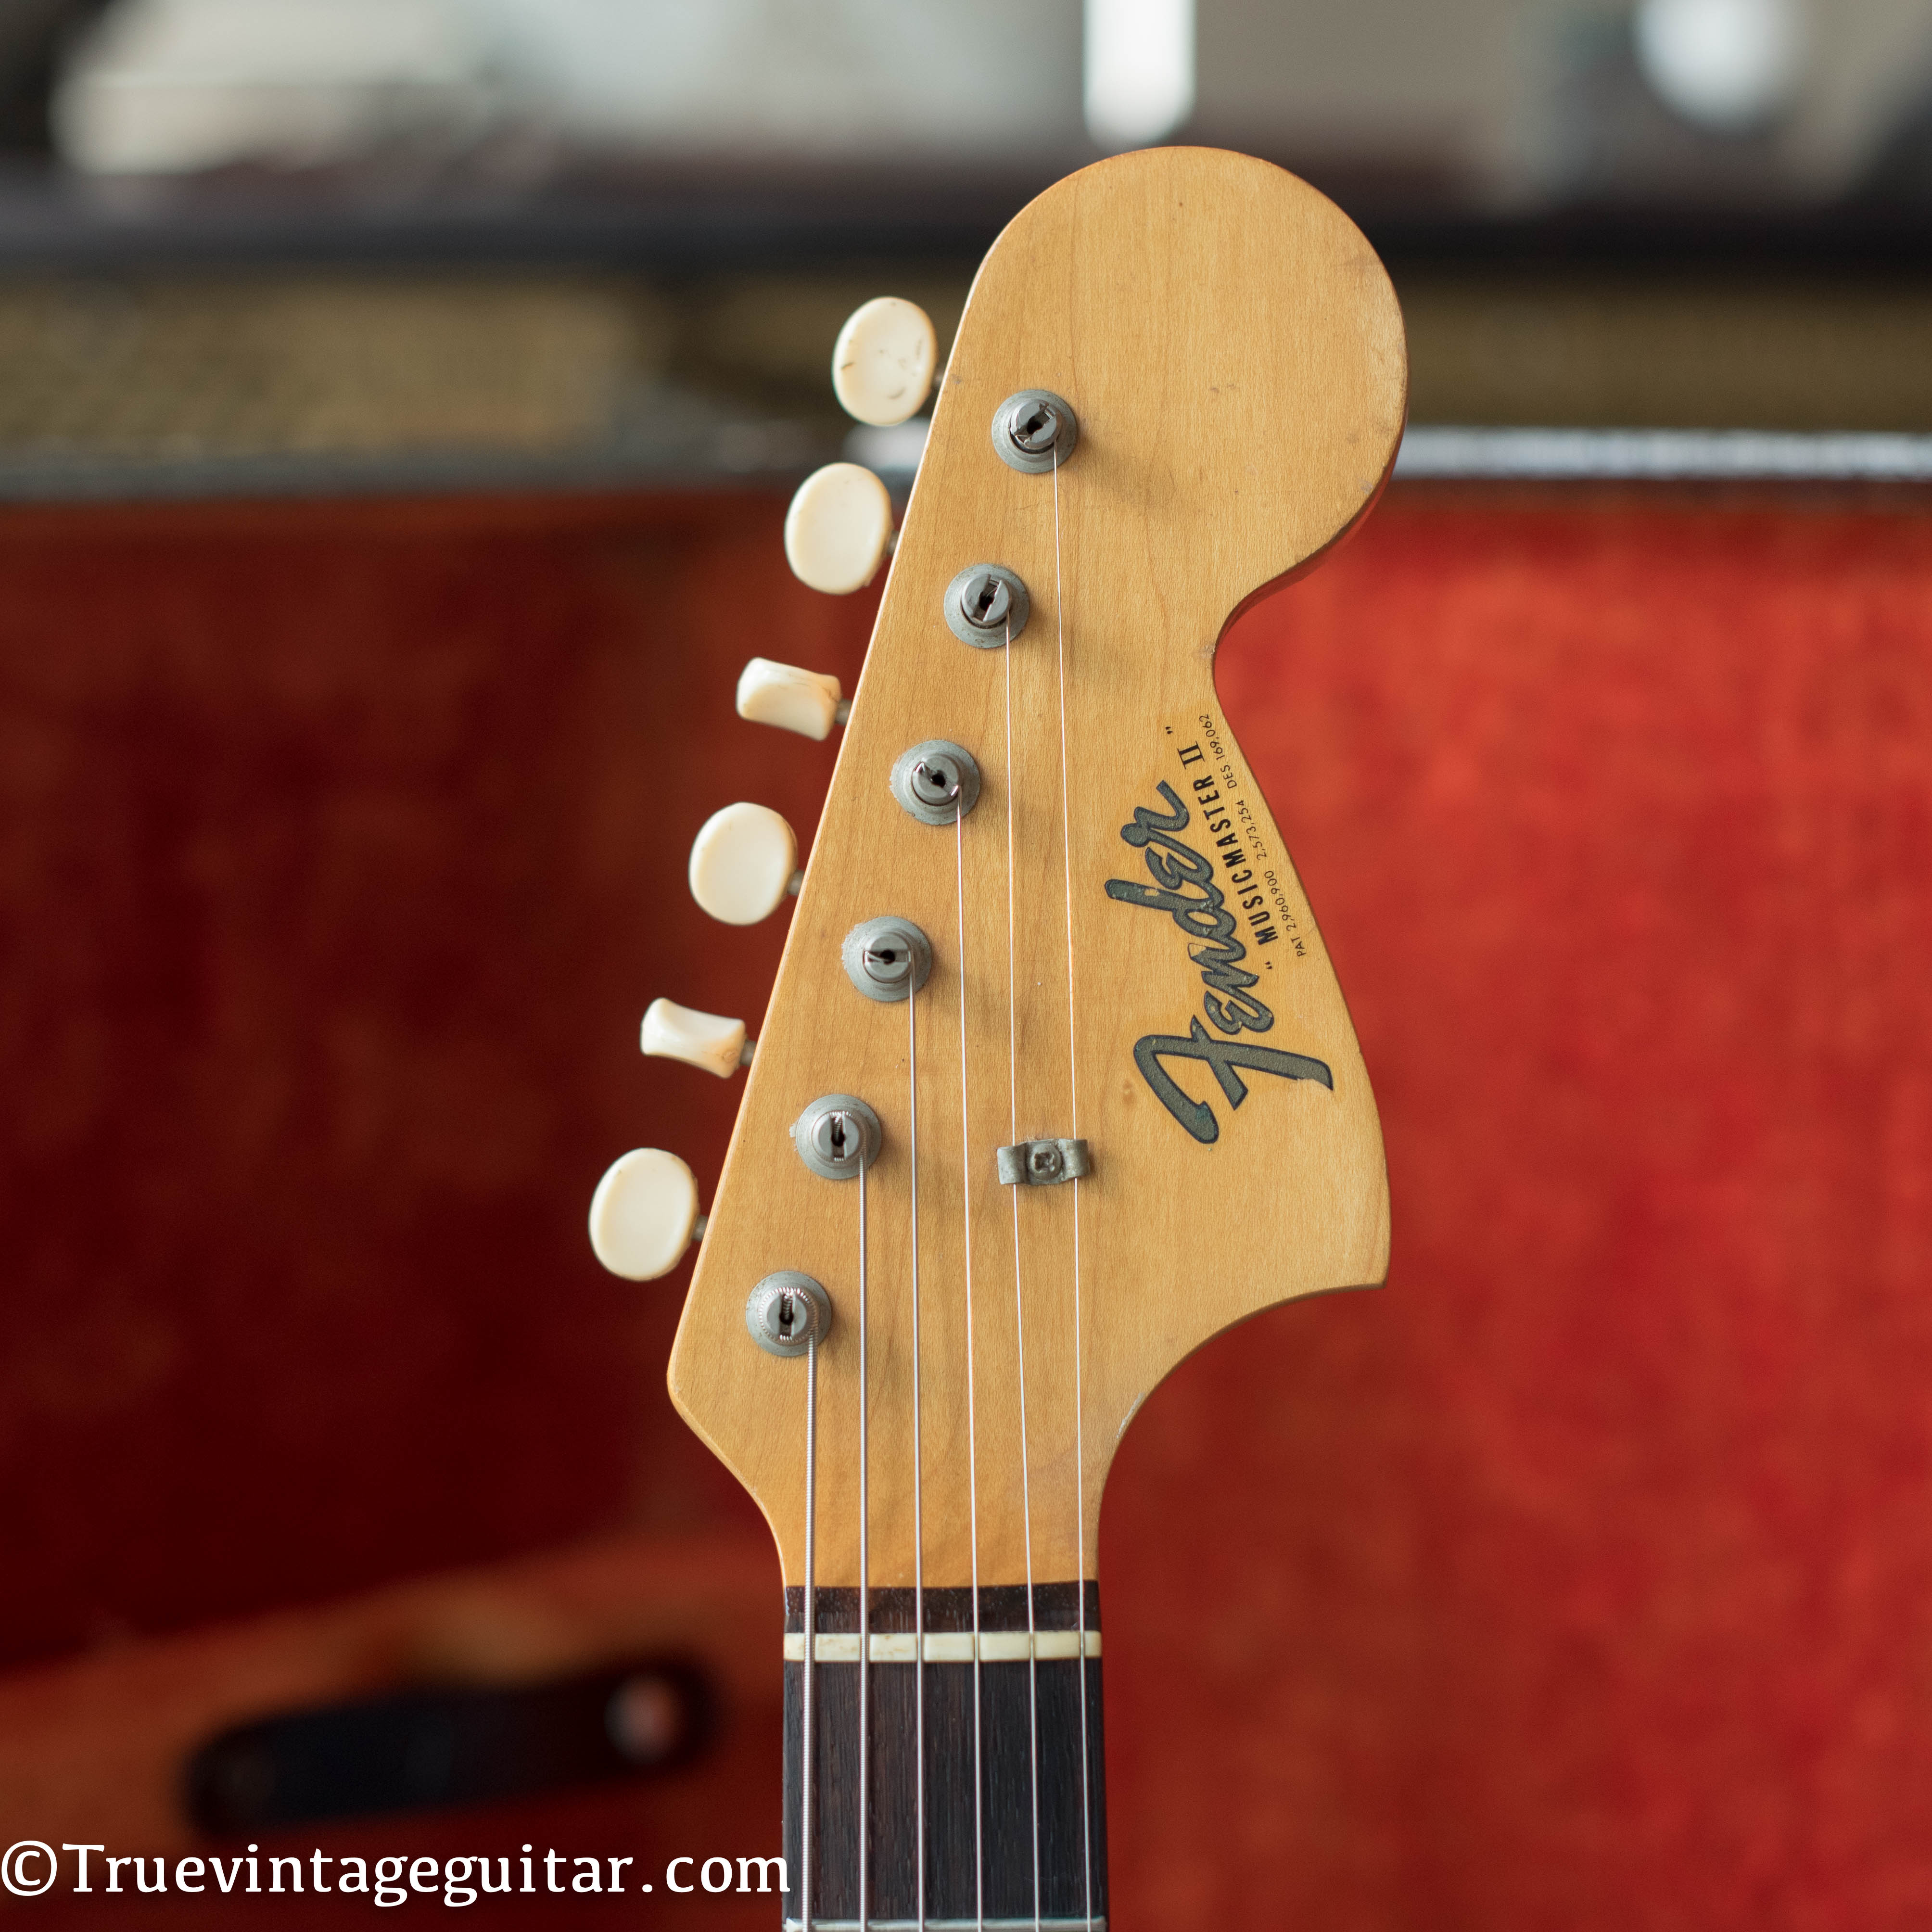 Fender Musicmaster II headstock vintage 1967